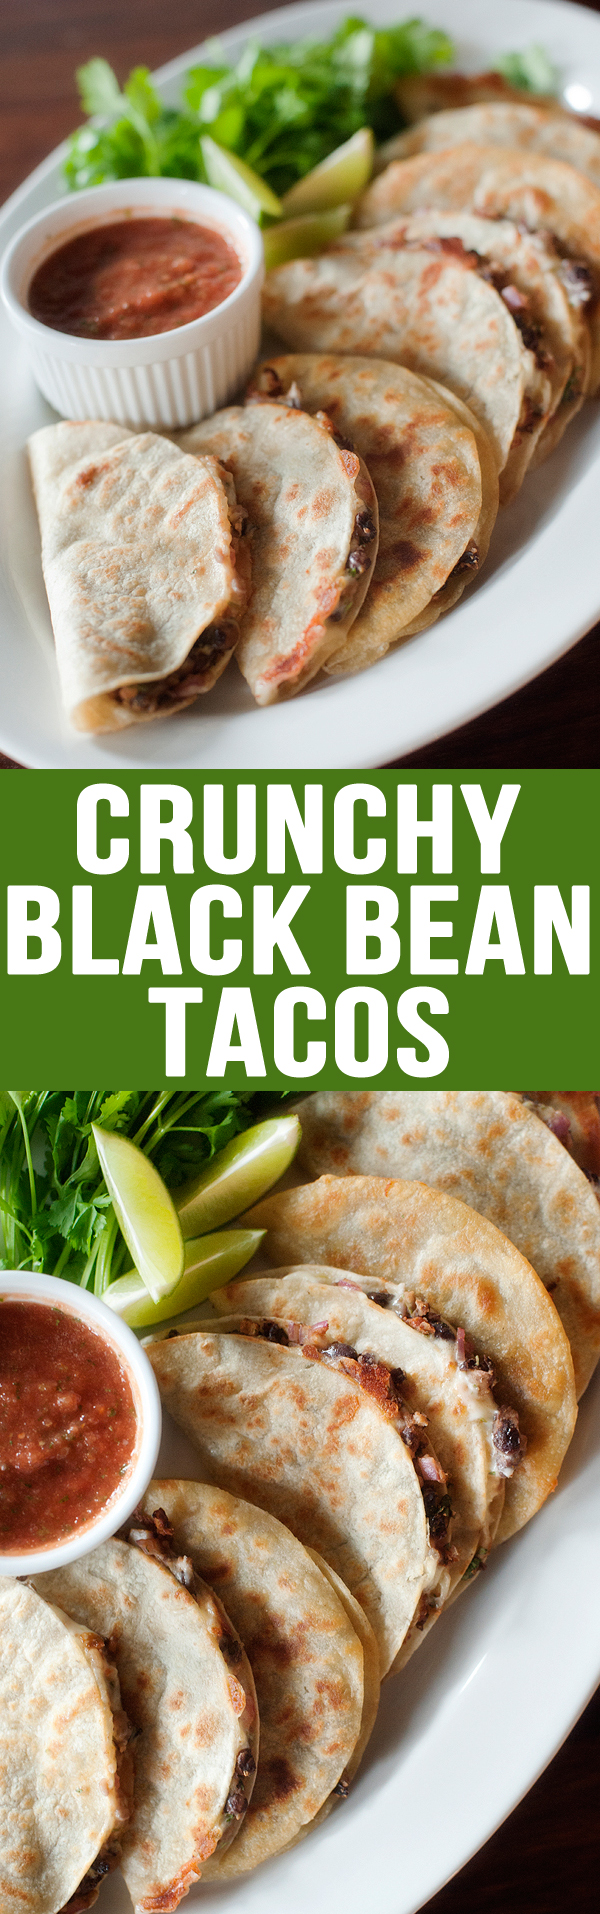 Crunchy Black Bean Tacos